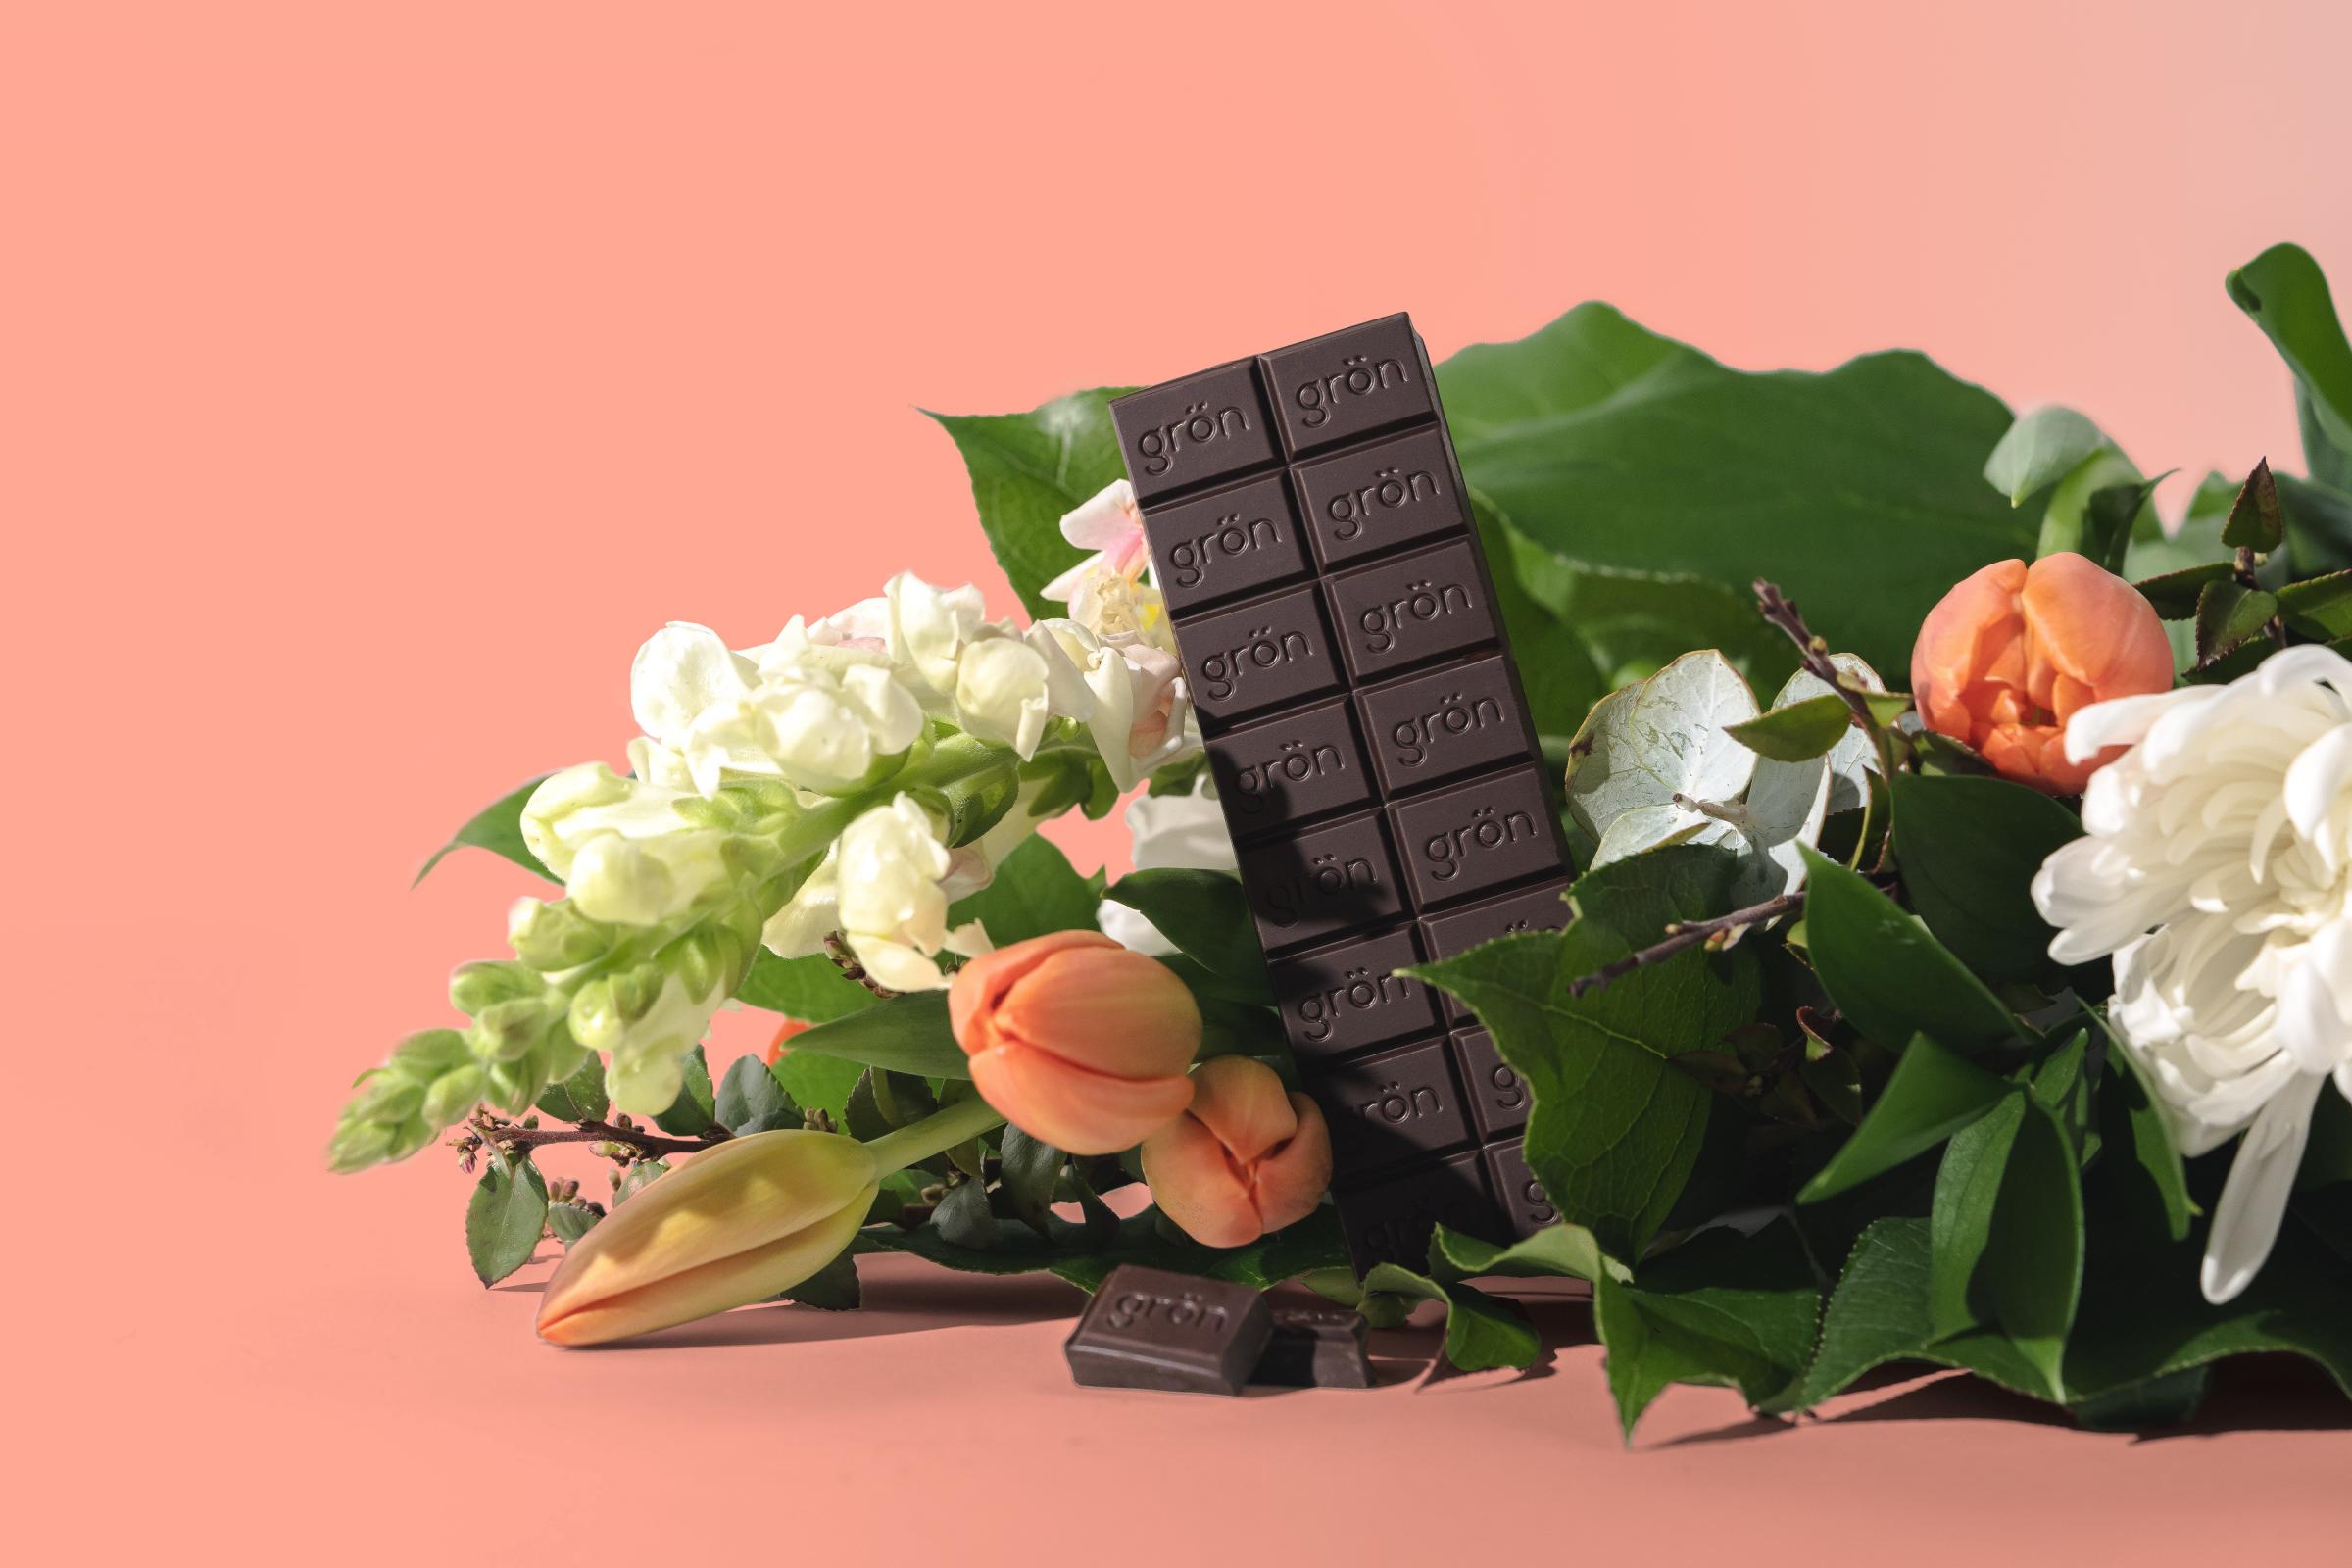 gron-chocolate-20-piece.jpg